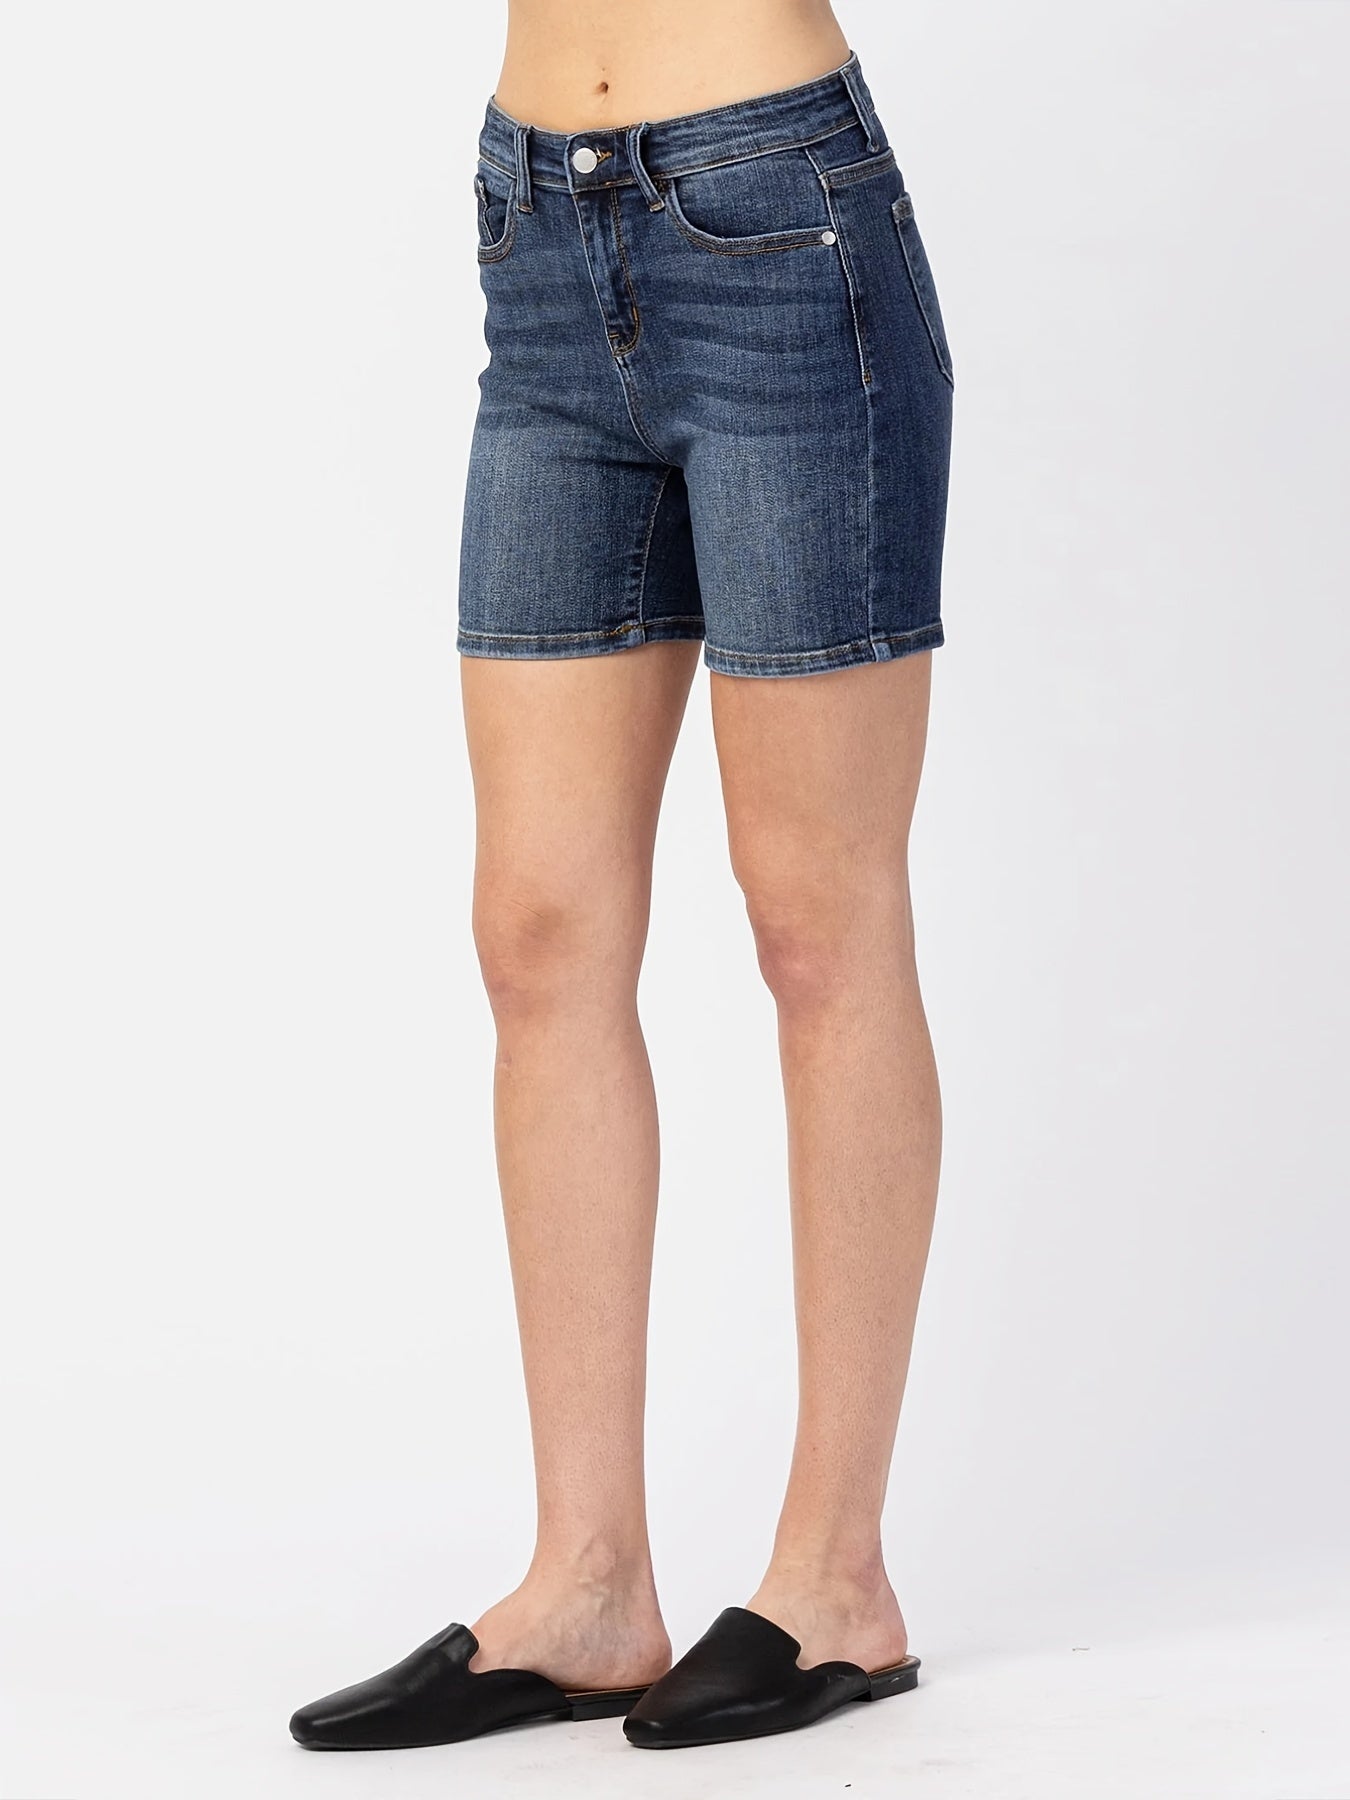 「lovevop」Light Blue Short Denim Pants, Slim Fit Slash Pockets High-Stretch Denim Shorts, Women's Denim Jeans & Clothing